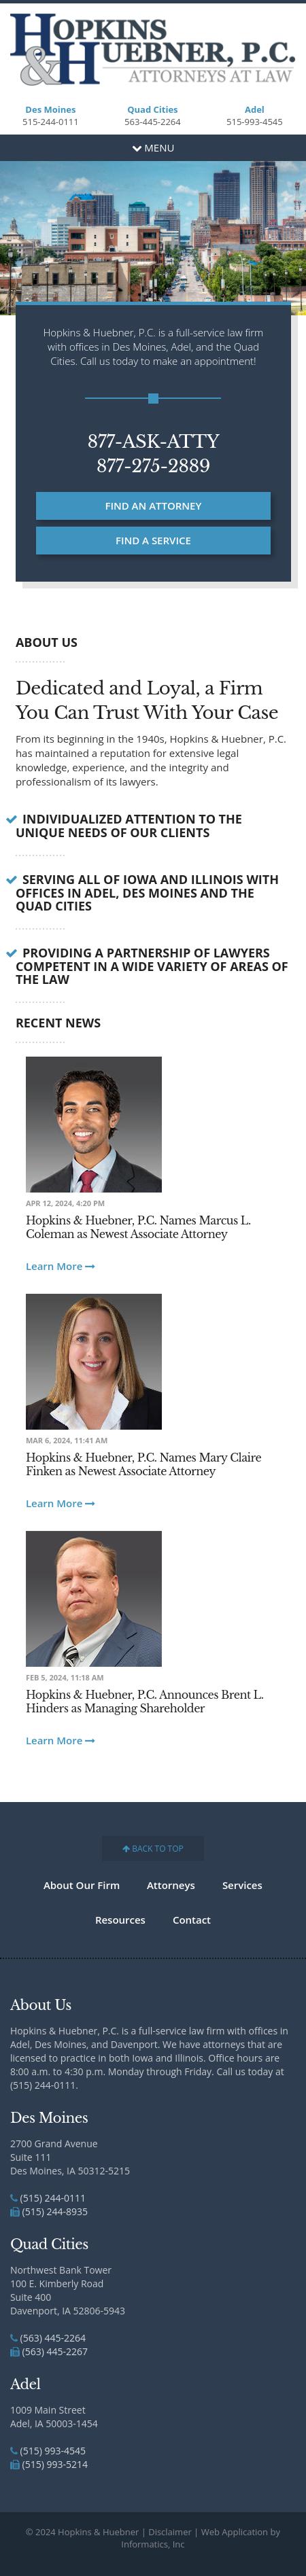 Law Offices of Hopkins & Huebner, P.C. - Des Moines IA Lawyers